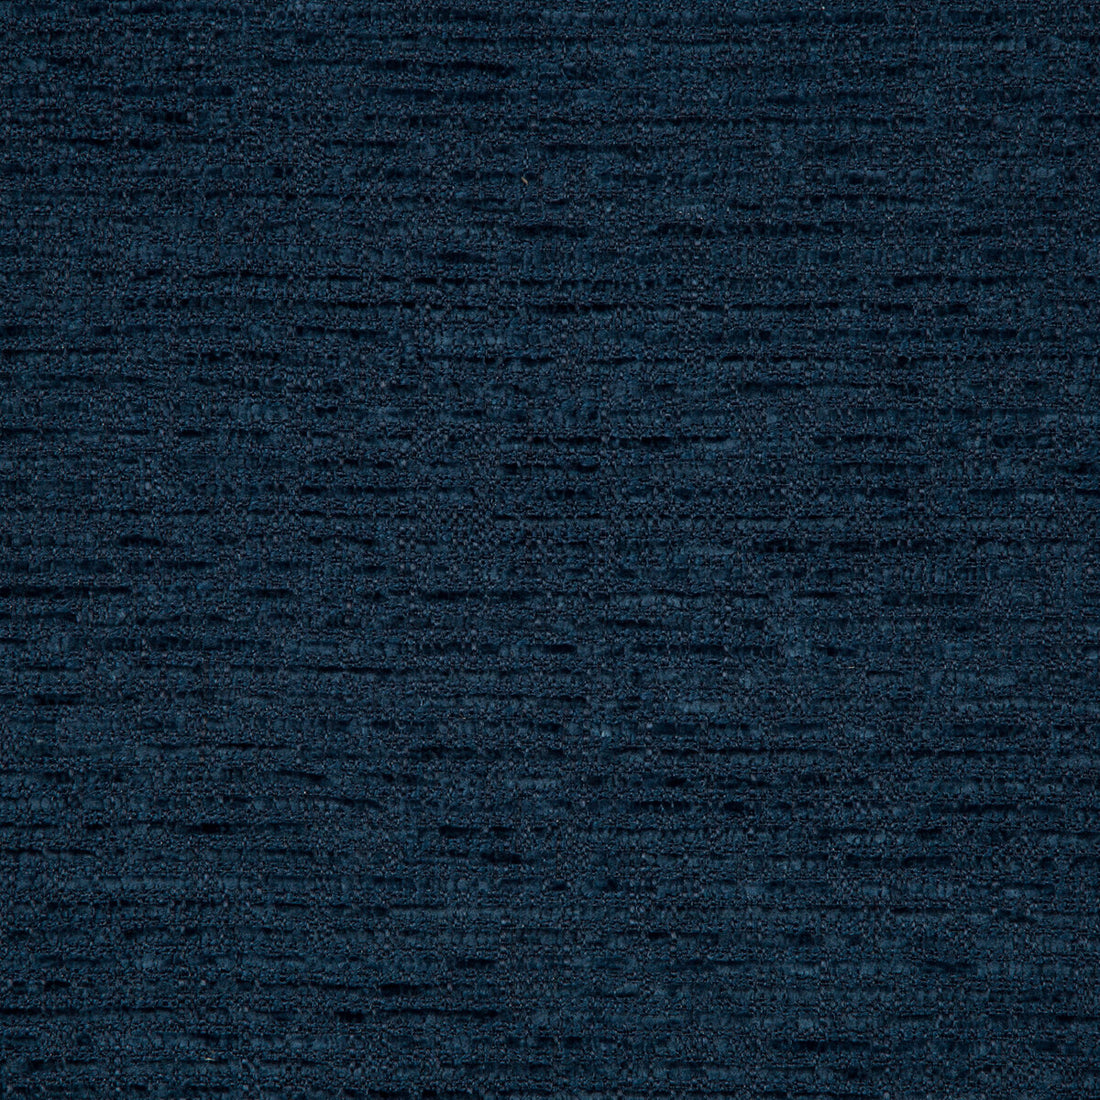 Kravet Smart fabric in 35940-50 color - pattern 35940.50.0 - by Kravet Smart in the Performance Kravetarmor collection